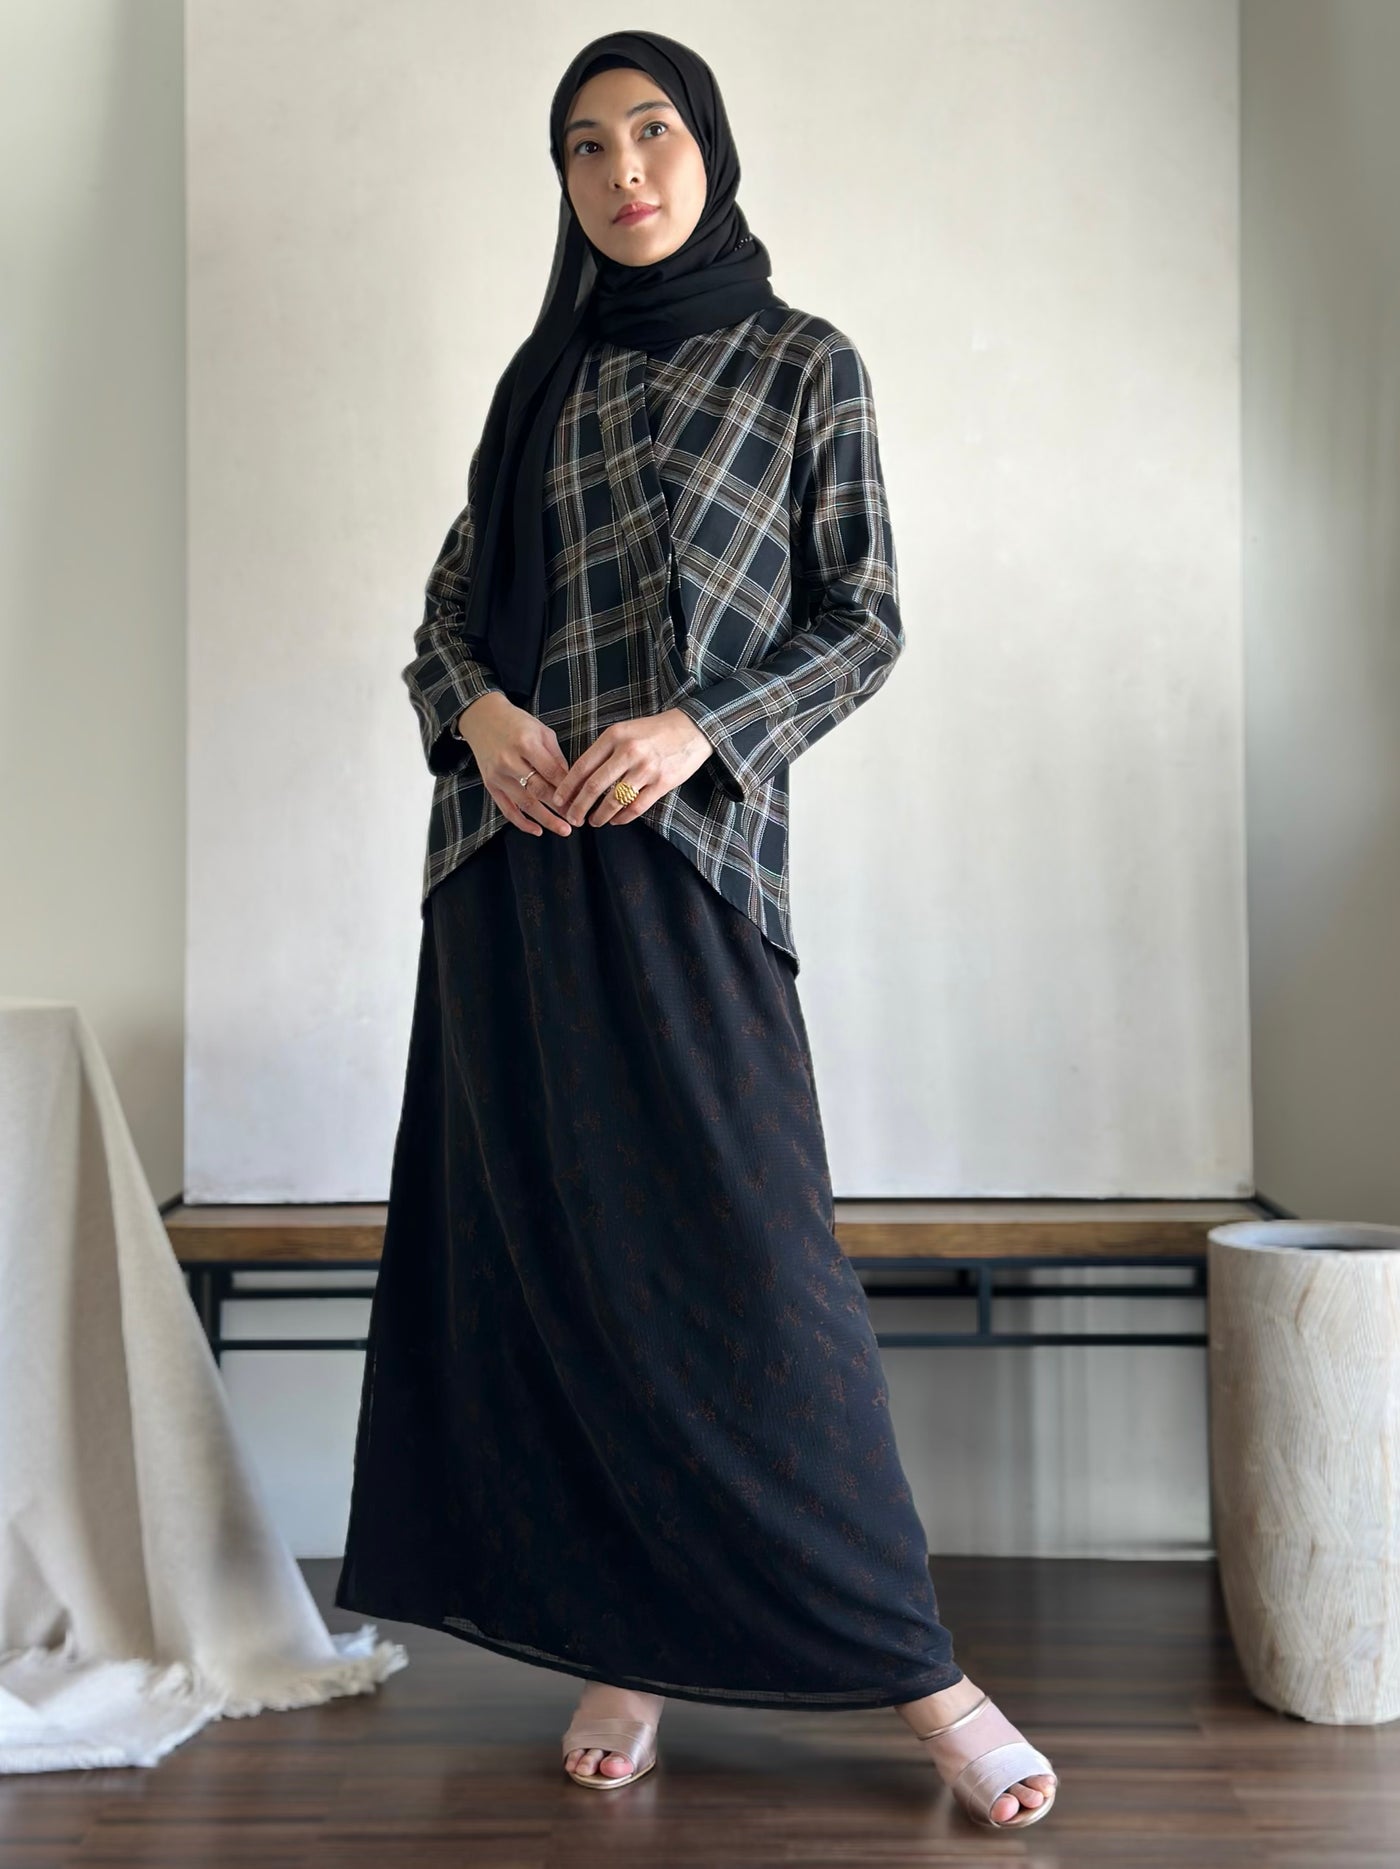 CENGKIH Modern Kebaya with Skirt Set in Black Plaid